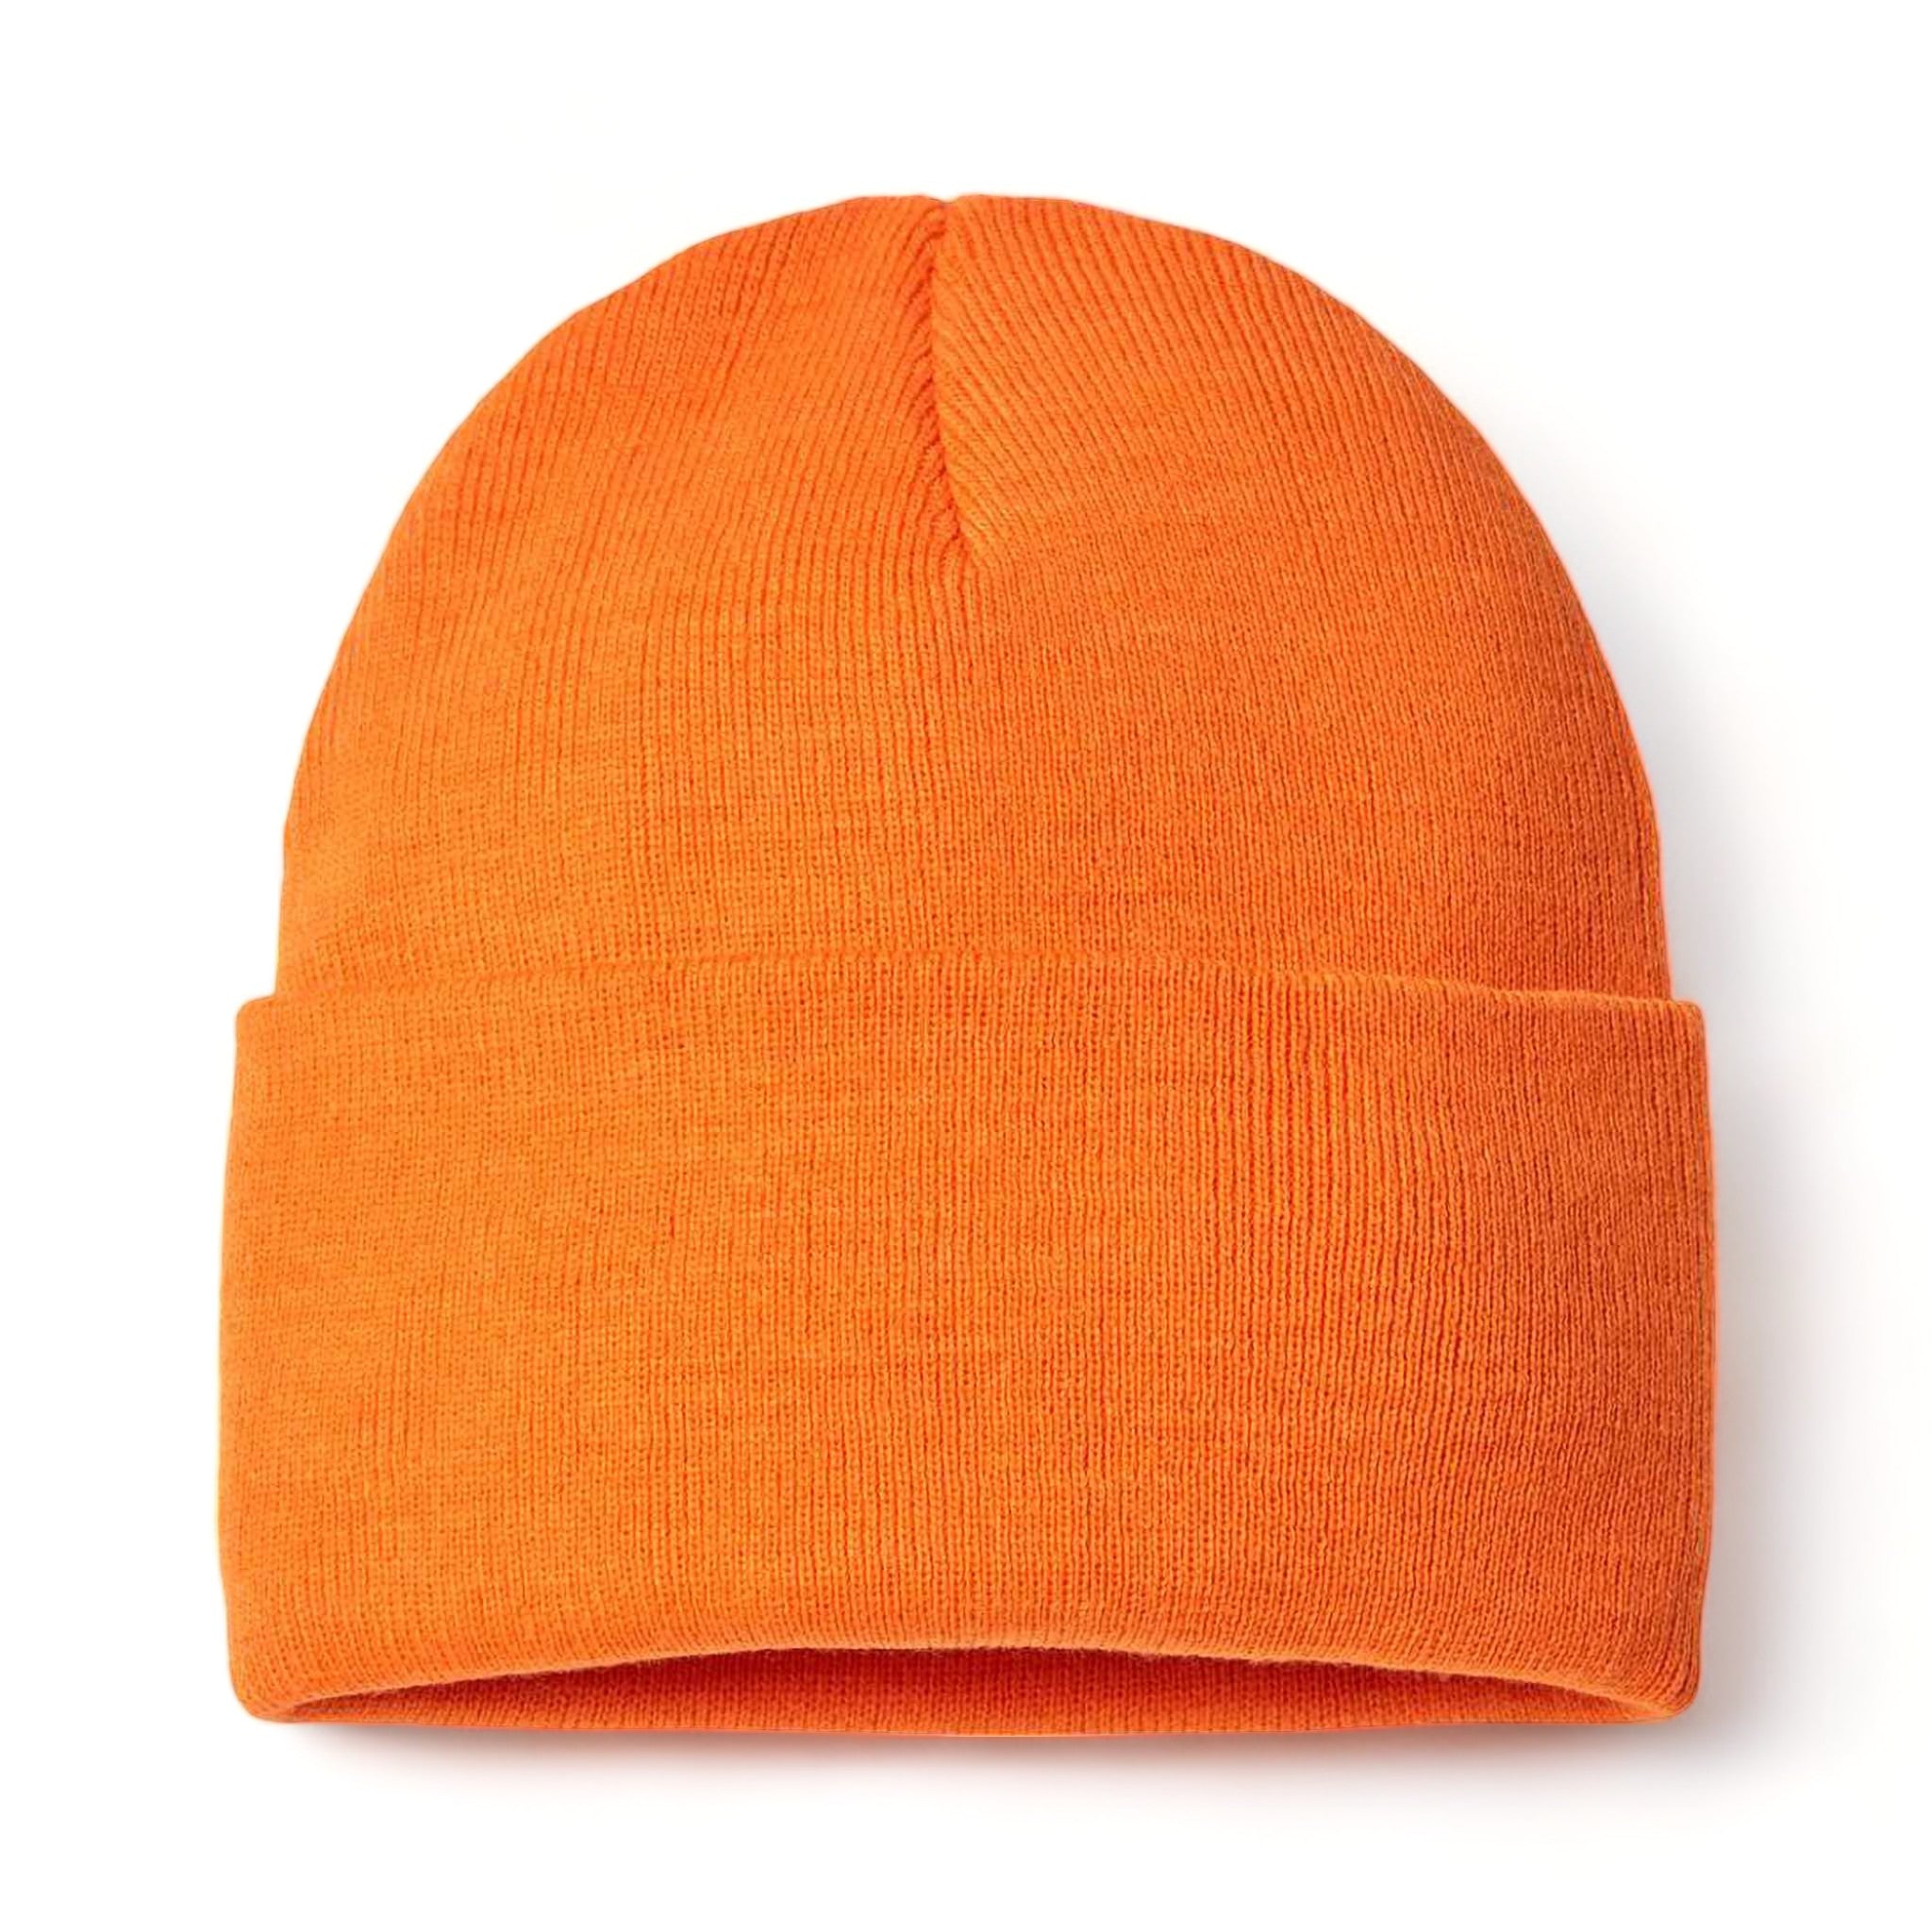 Front view of Atlantis Headwear PURE custom hat in orange